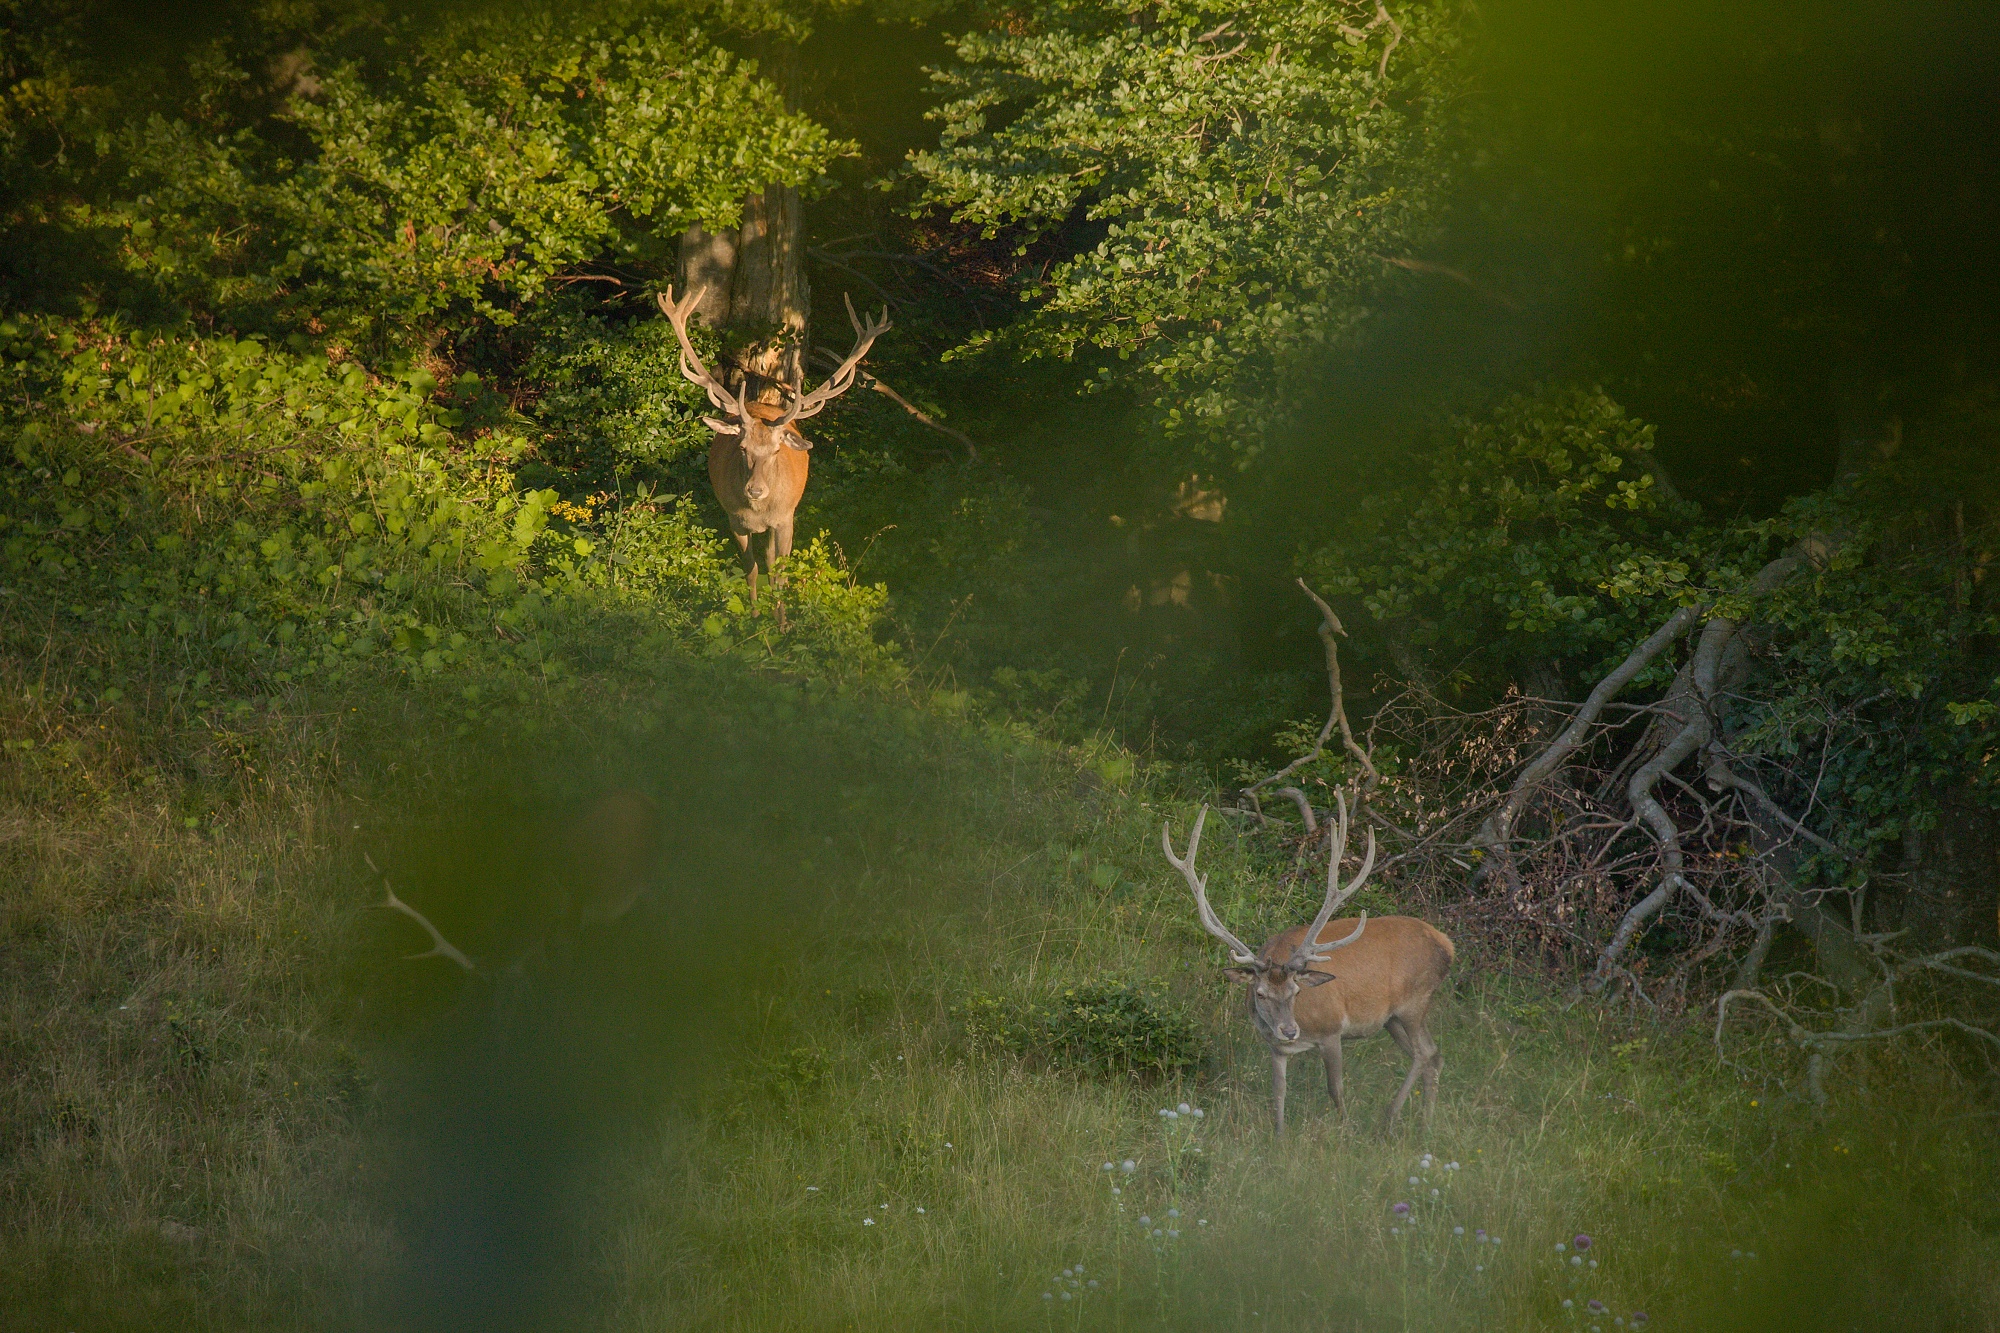 jeleň lesný (Cervus elaphus) Red deer, Malá Fatra, Slovensko Canon EOS 6d mark II + Canon 100-400 f4.5-5.6 L IS II USM, 400mm, 1/400, f5.6, ISO 1000, 3. august 2021